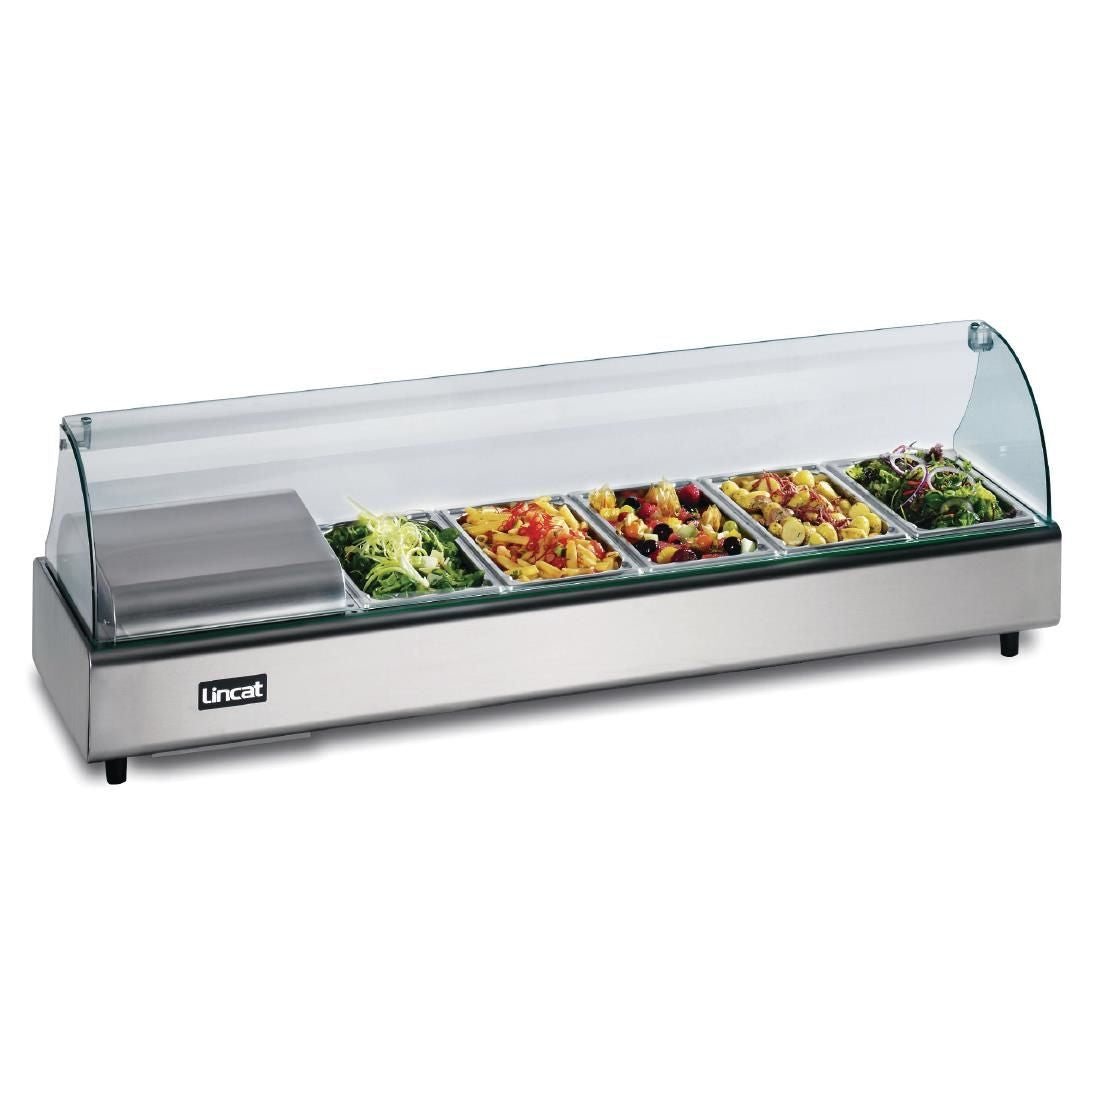 FDB5 - Lincat Seal Counter-top Food Display Bar - Refrigerated - W 1222 mm - 0.175 kW JD Catering Equipment Solutions Ltd